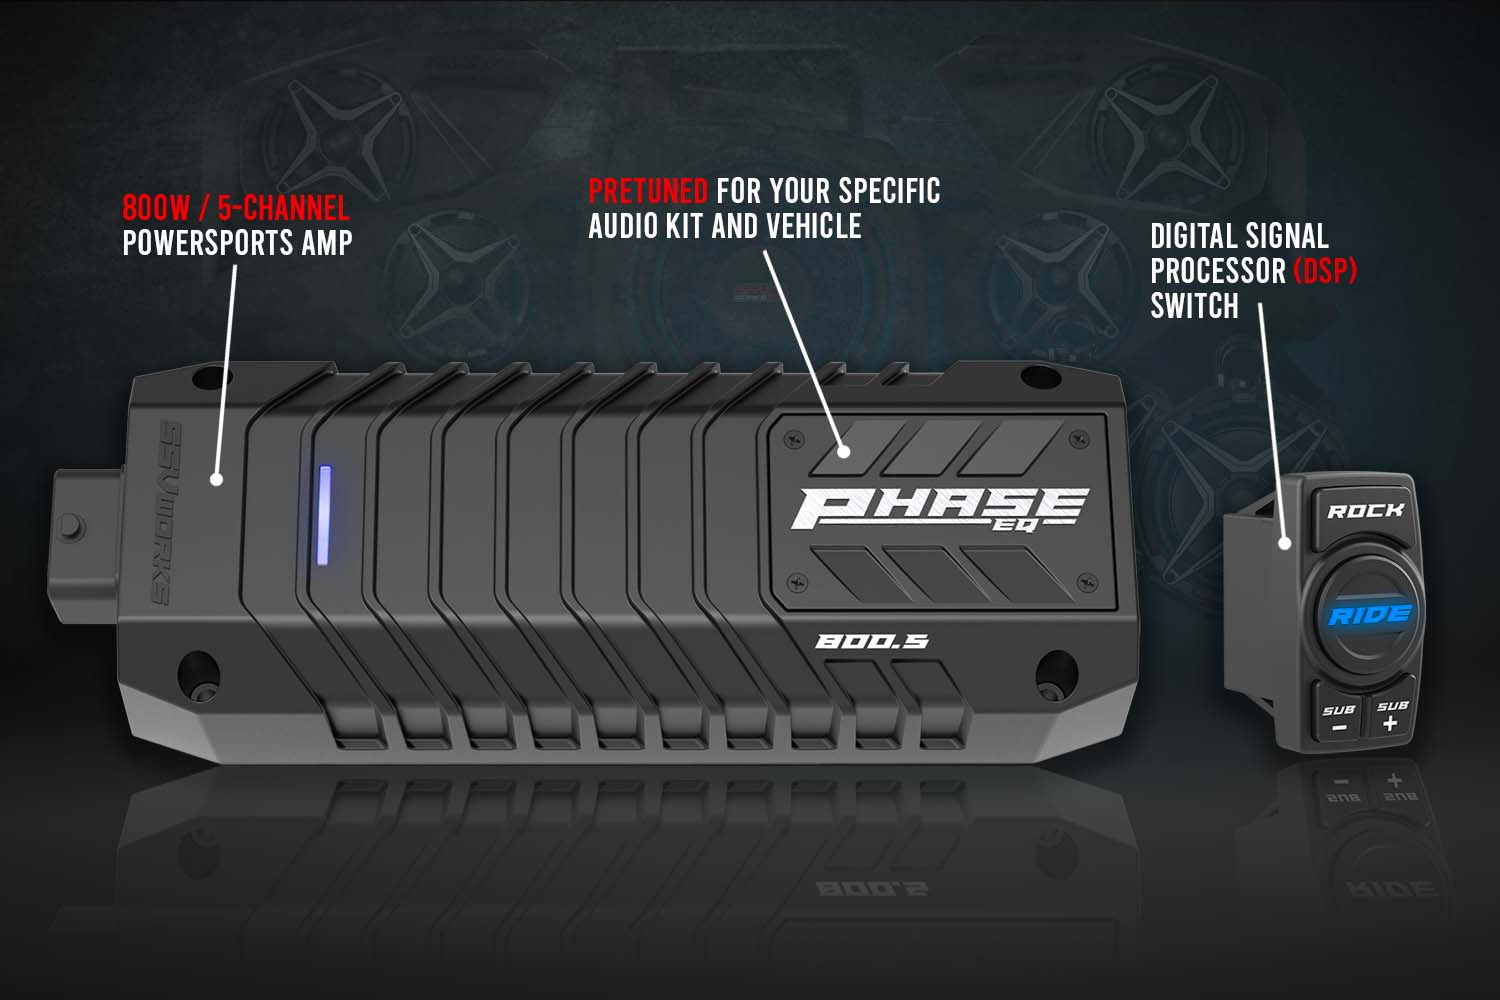 2020-2024 Polaris RZR Pro A-Spec SSV 3-Speaker Plug-&-Play System